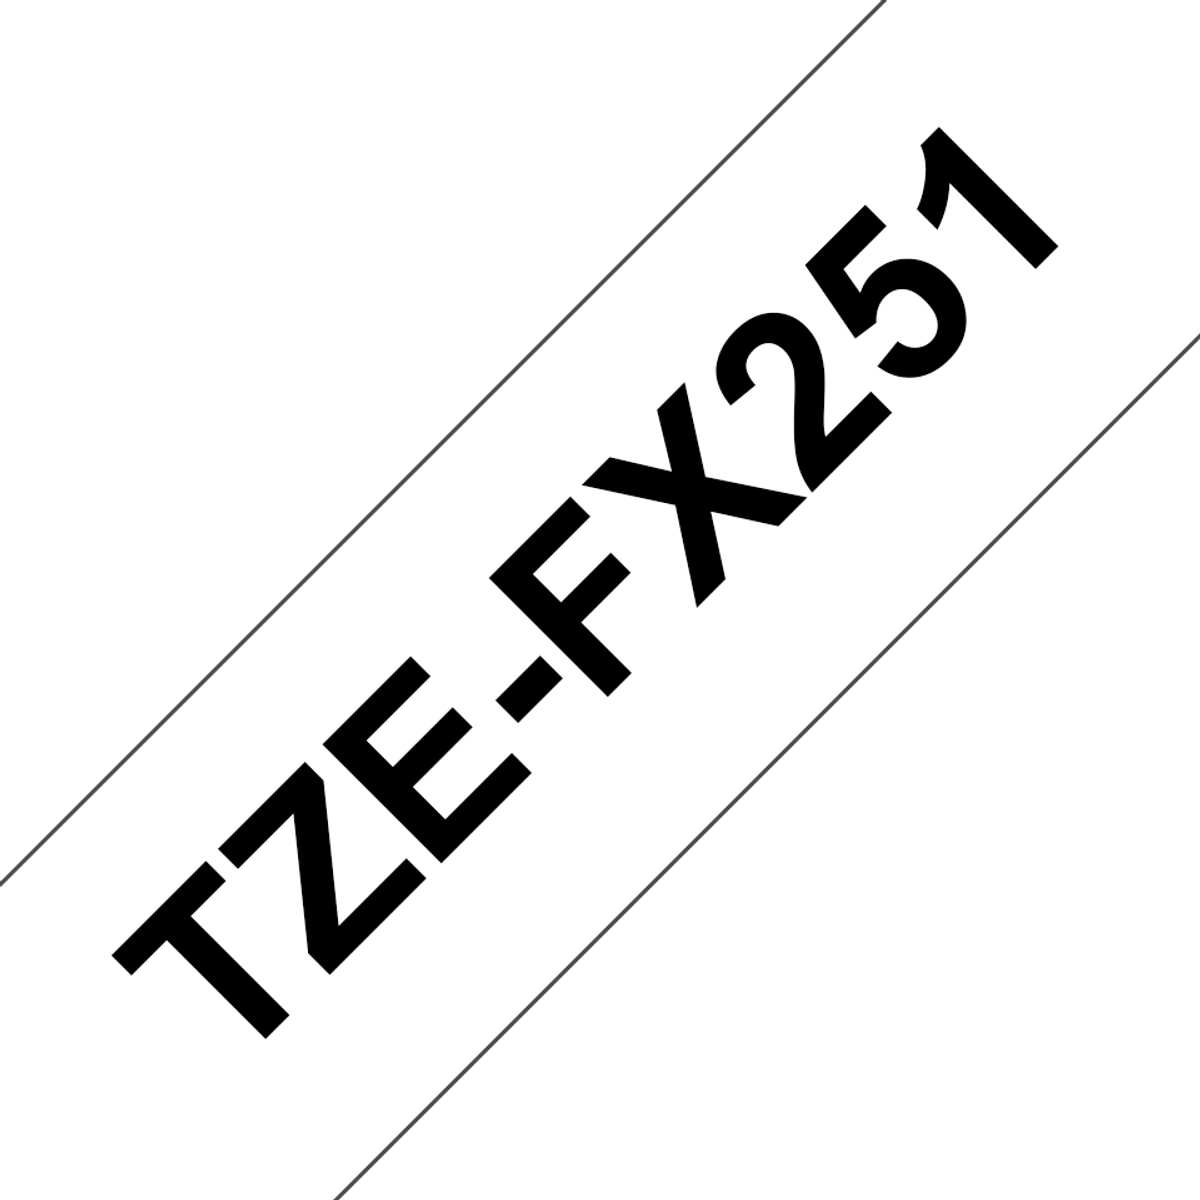 TZEFX251 24mm Flexi Blk On Wt Label Tape